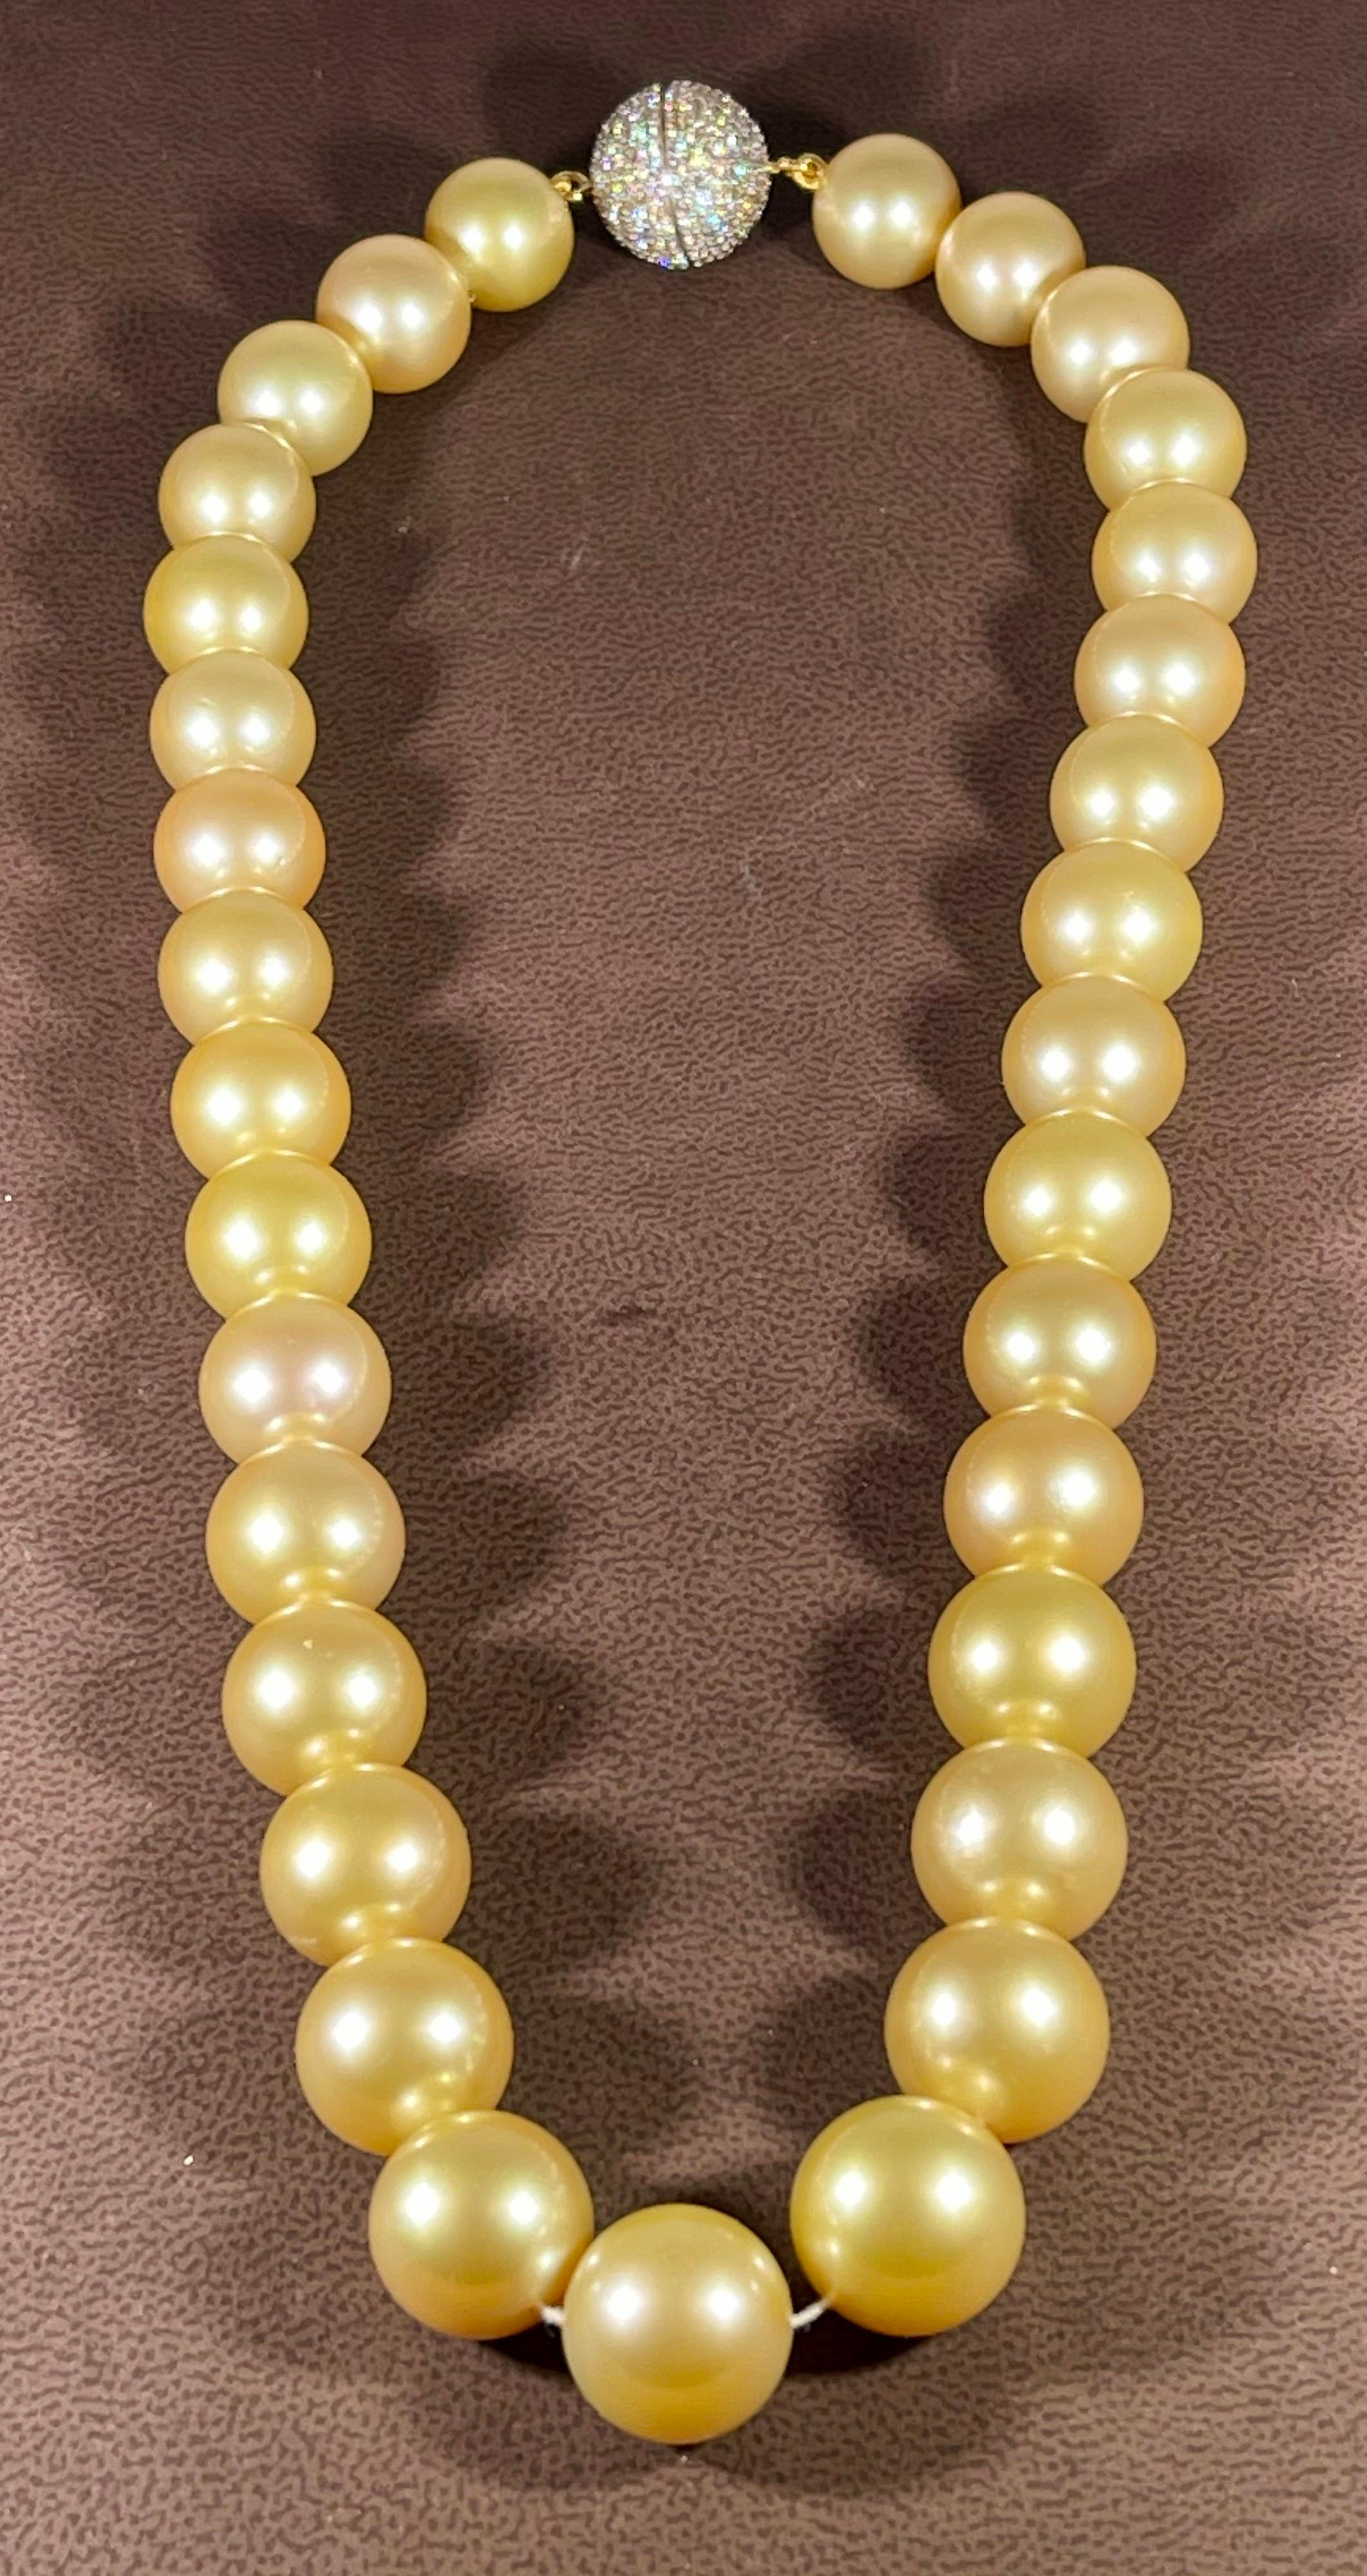 Golden South Sea Pearls Strand Necklace 14 Karat Gold Diamond Ball Clasp 6 ct 4